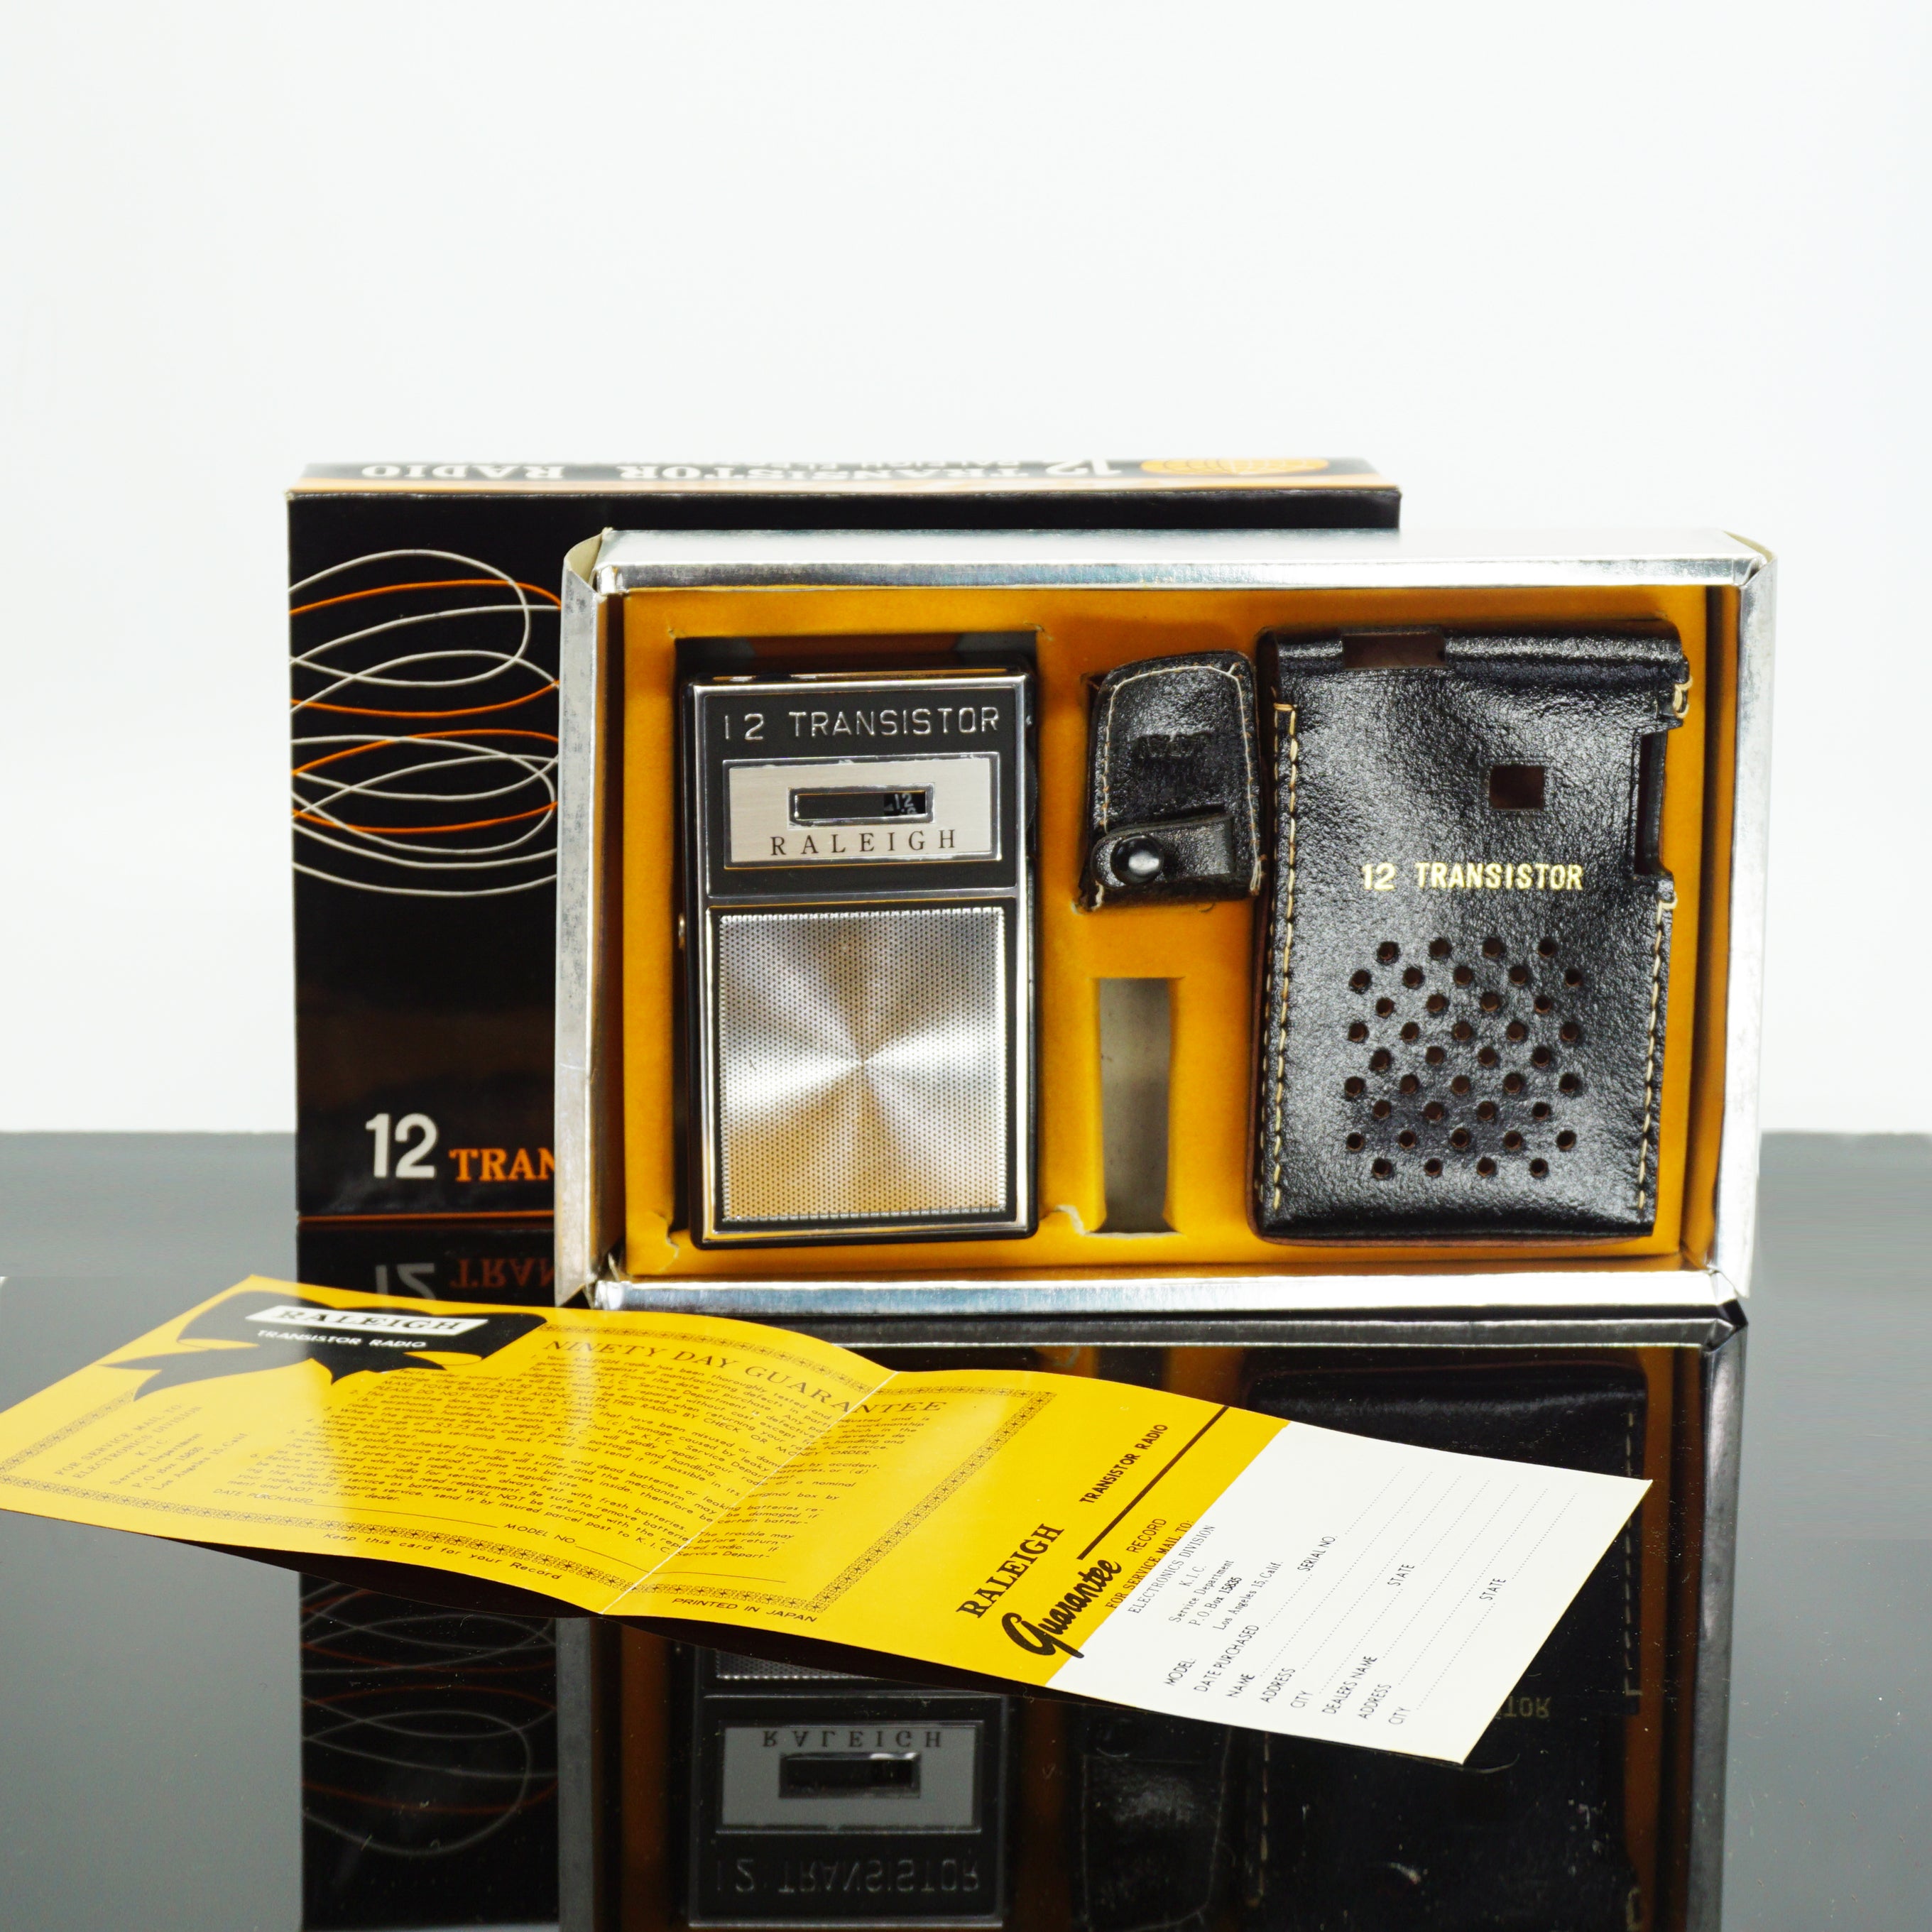 Mid-Century Raleigh's 12 Transistor Radio: Model 1212. Made in Japan. NIB